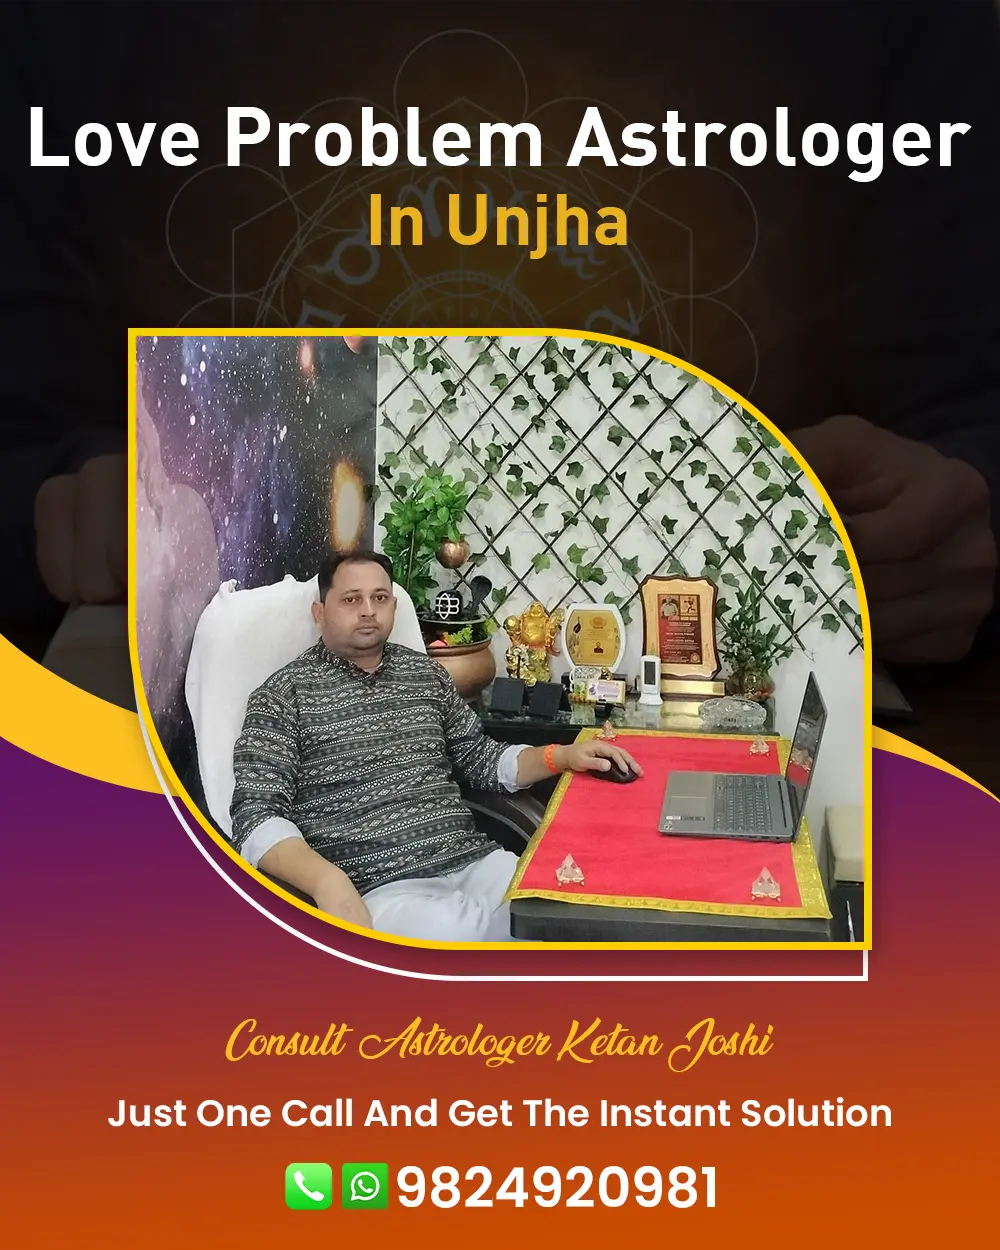 Love Problem Astrologer In Unjha